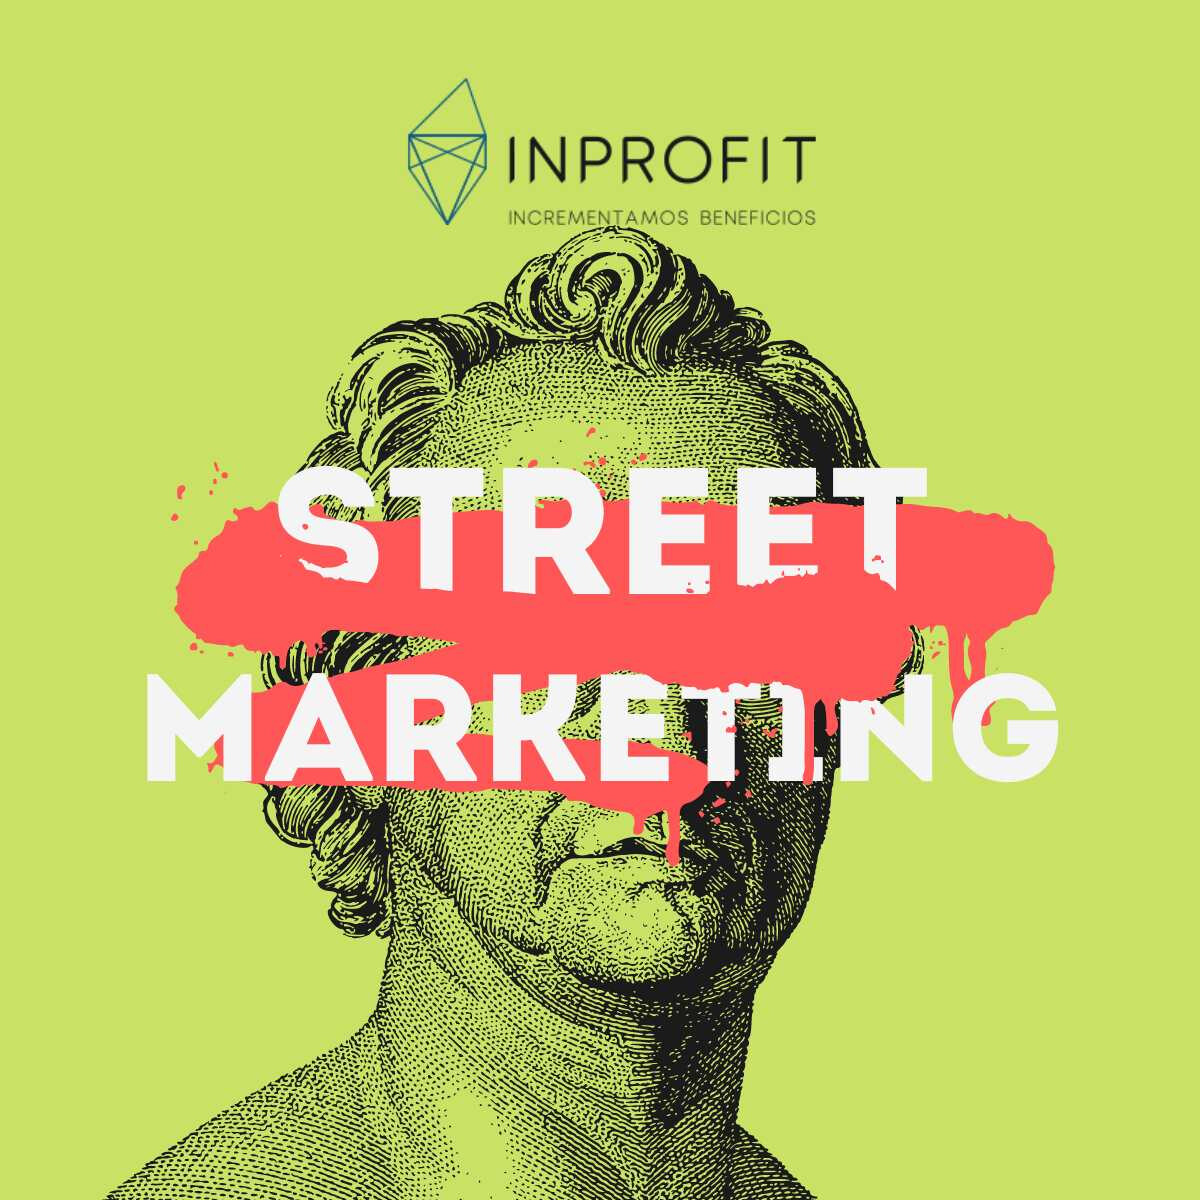 Street Marketing: 9 ejemplos de branding urbano